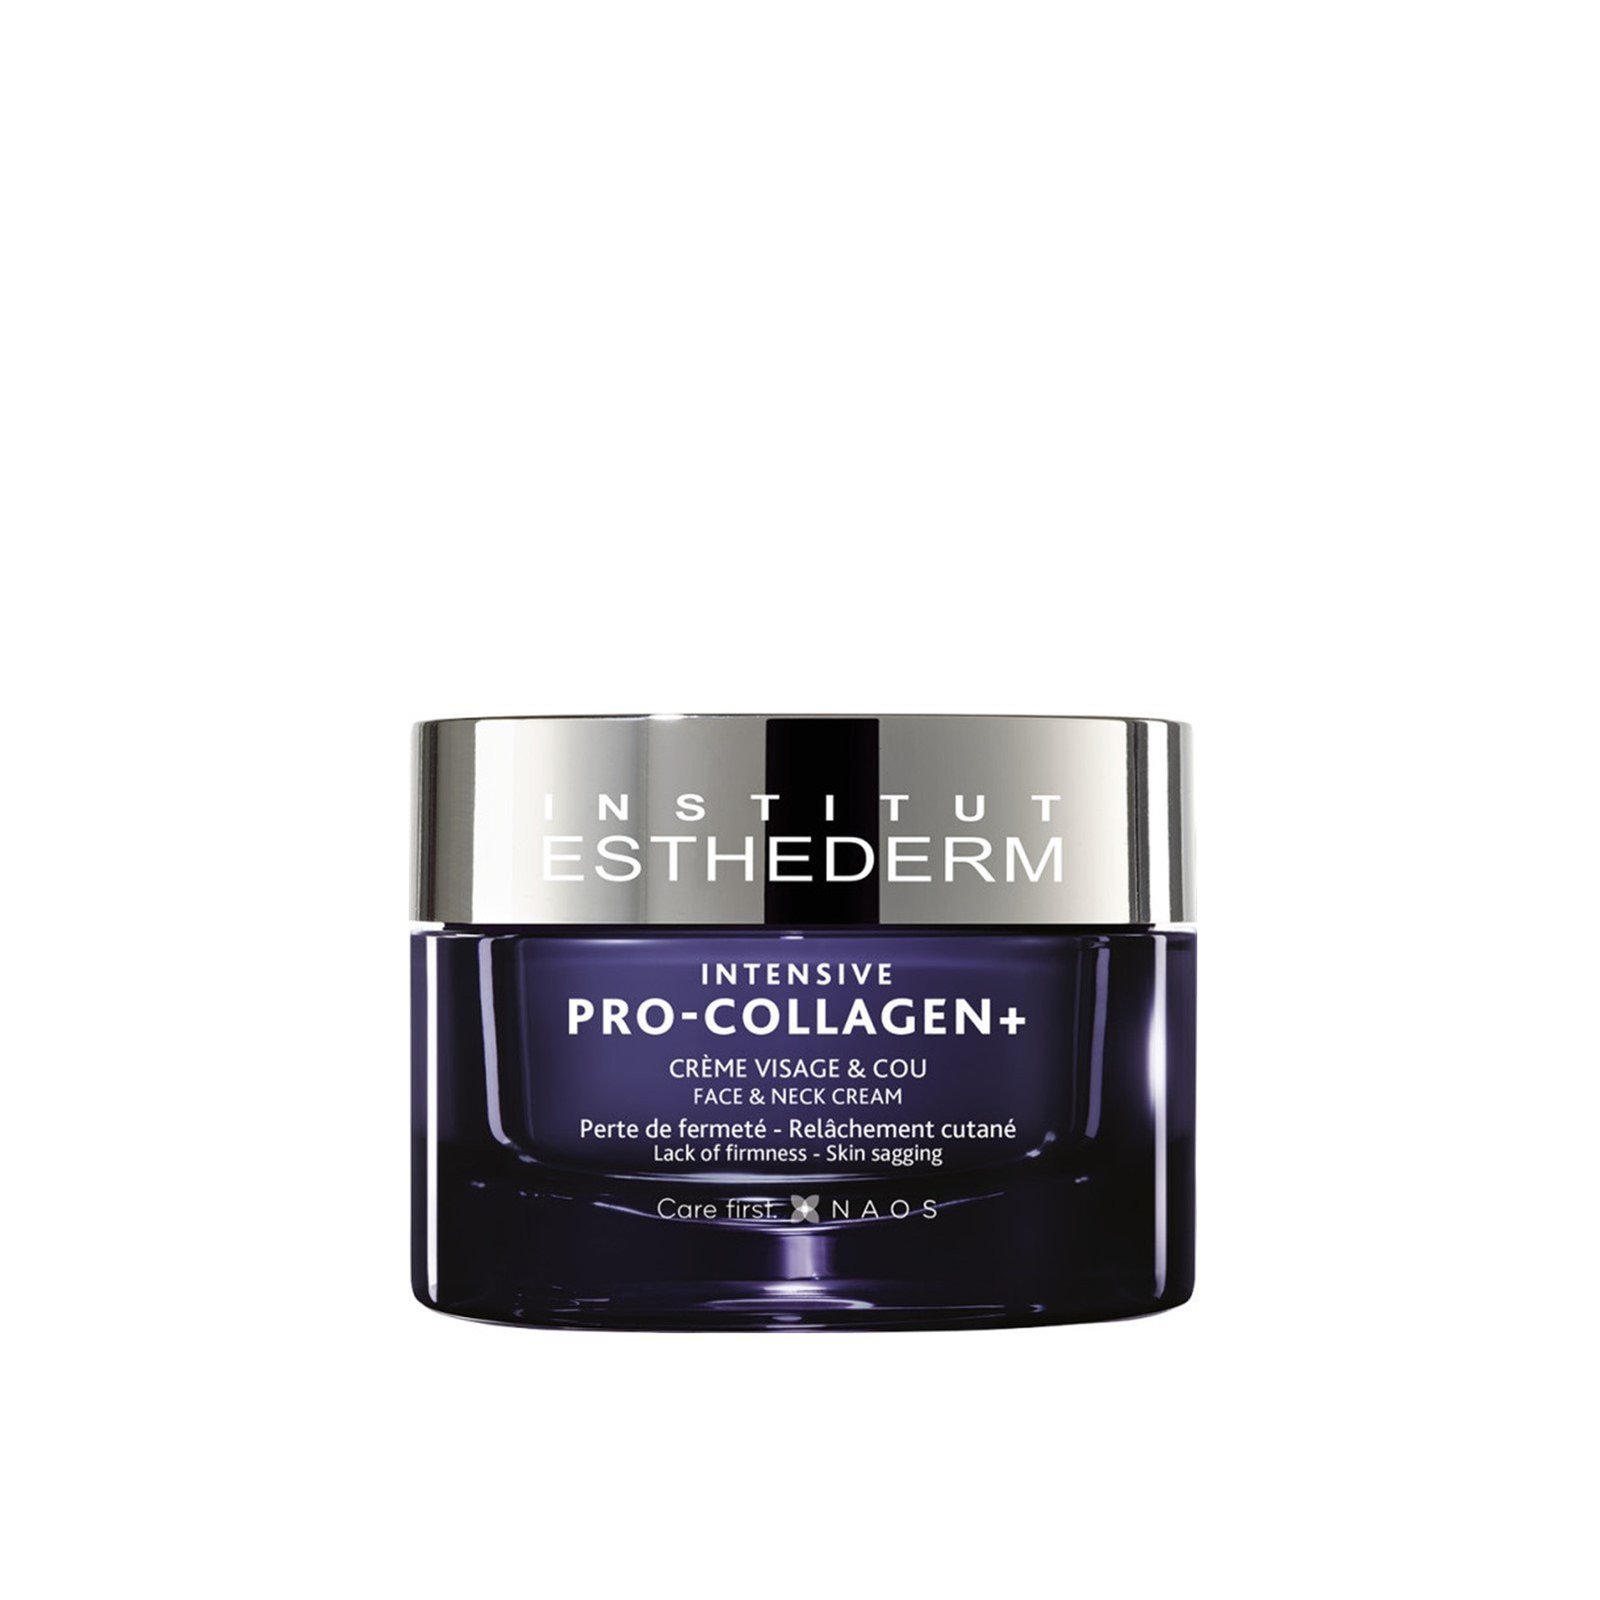 Esthederm Intensive Pro-Collagen+ Face & Neck Cream 50ml